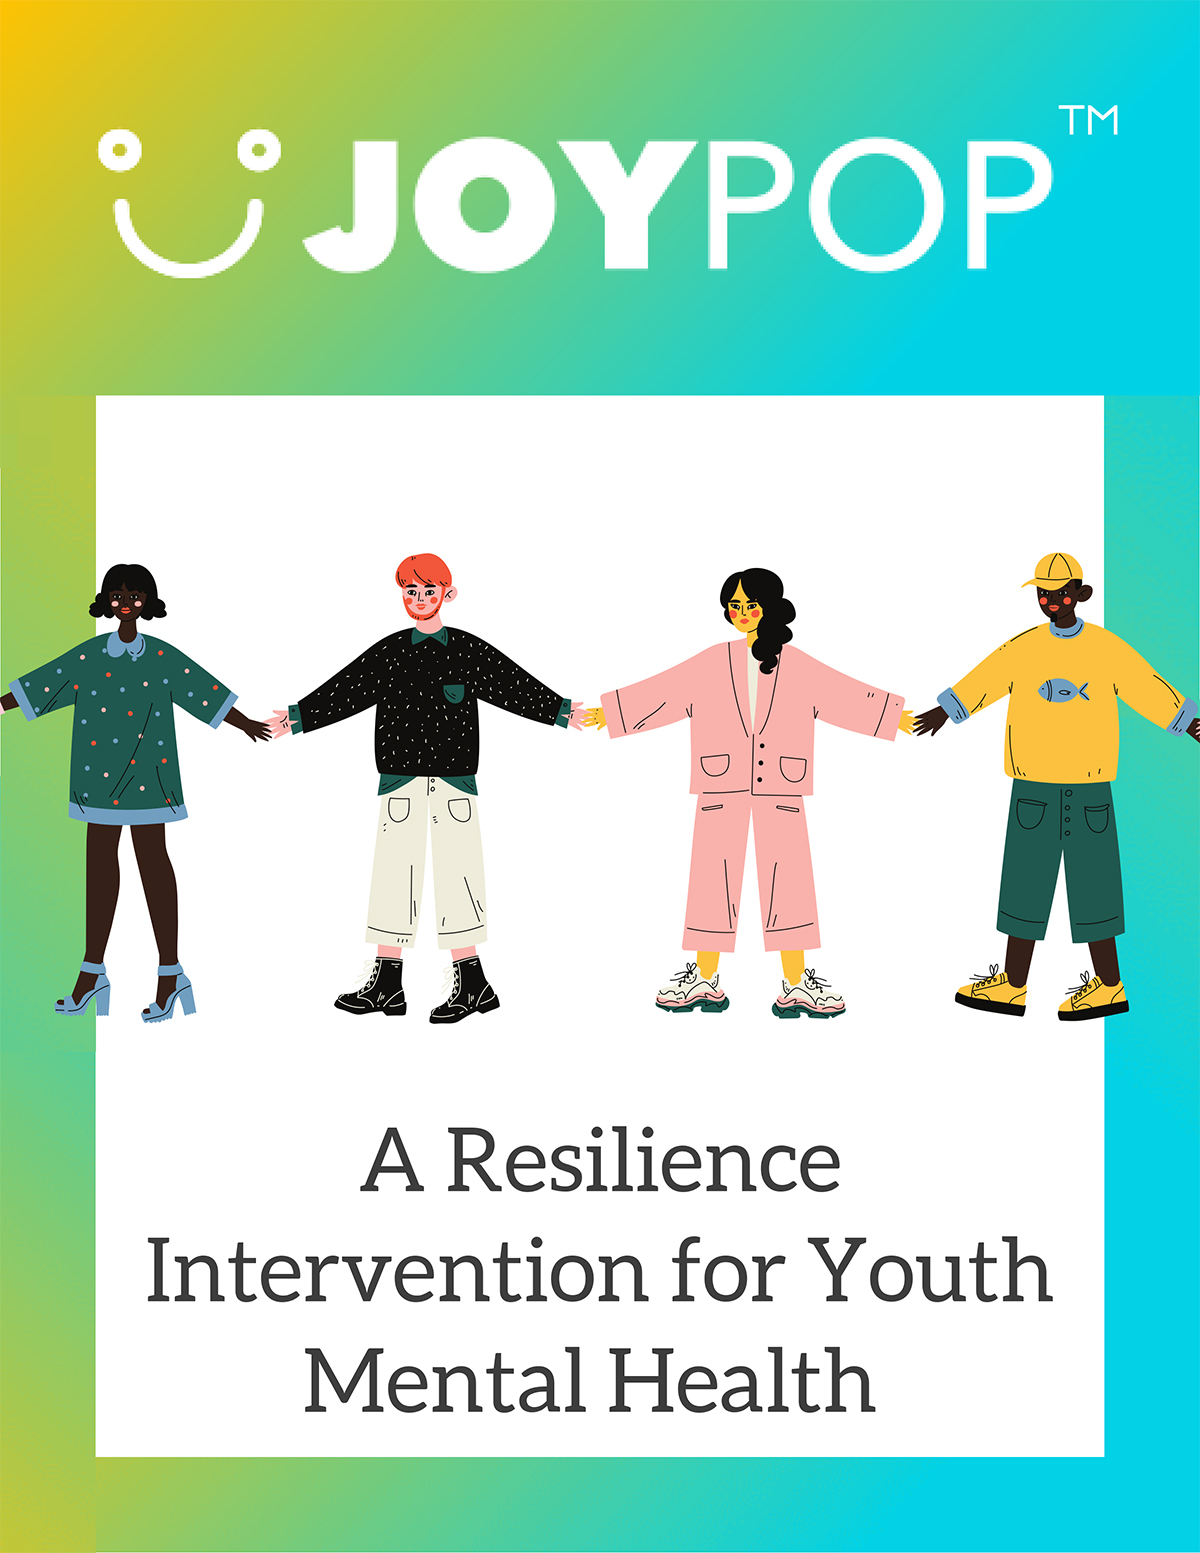 youth mental health, joypop app